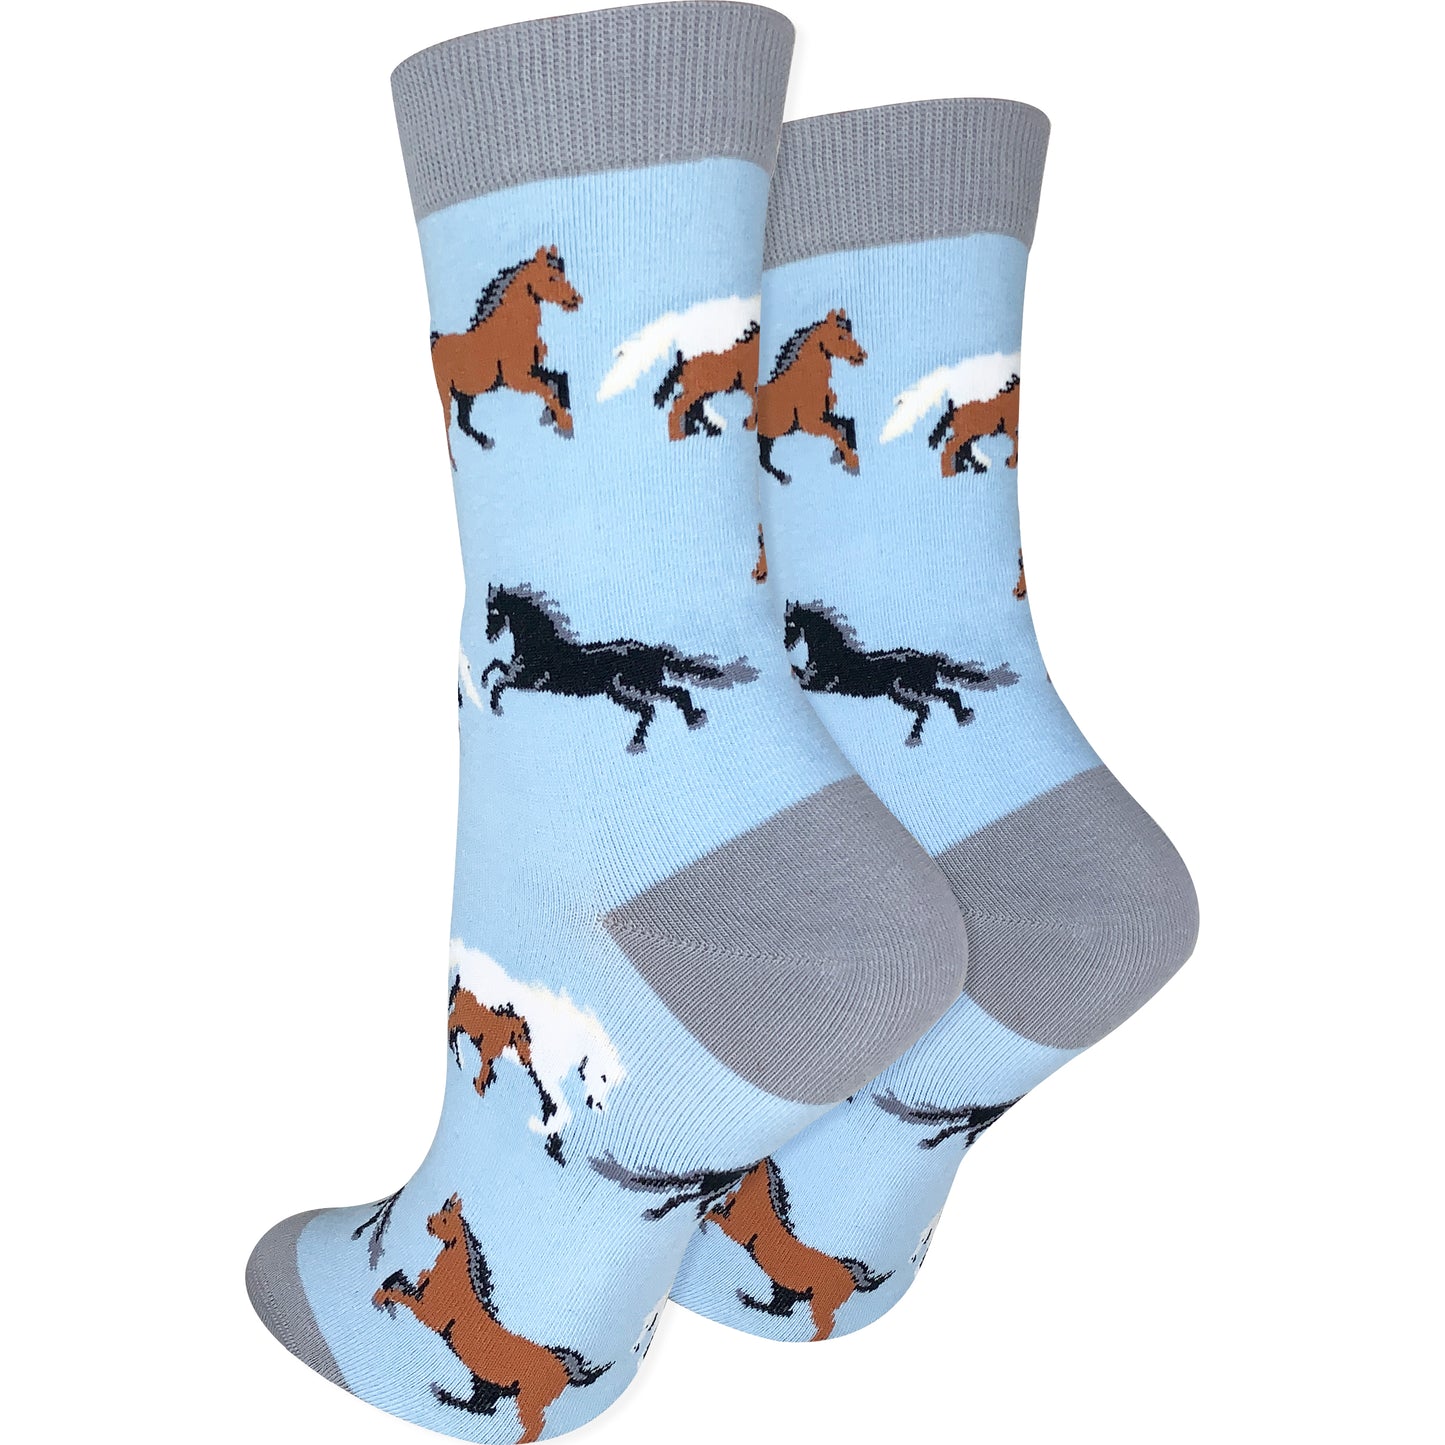 Horse Socks